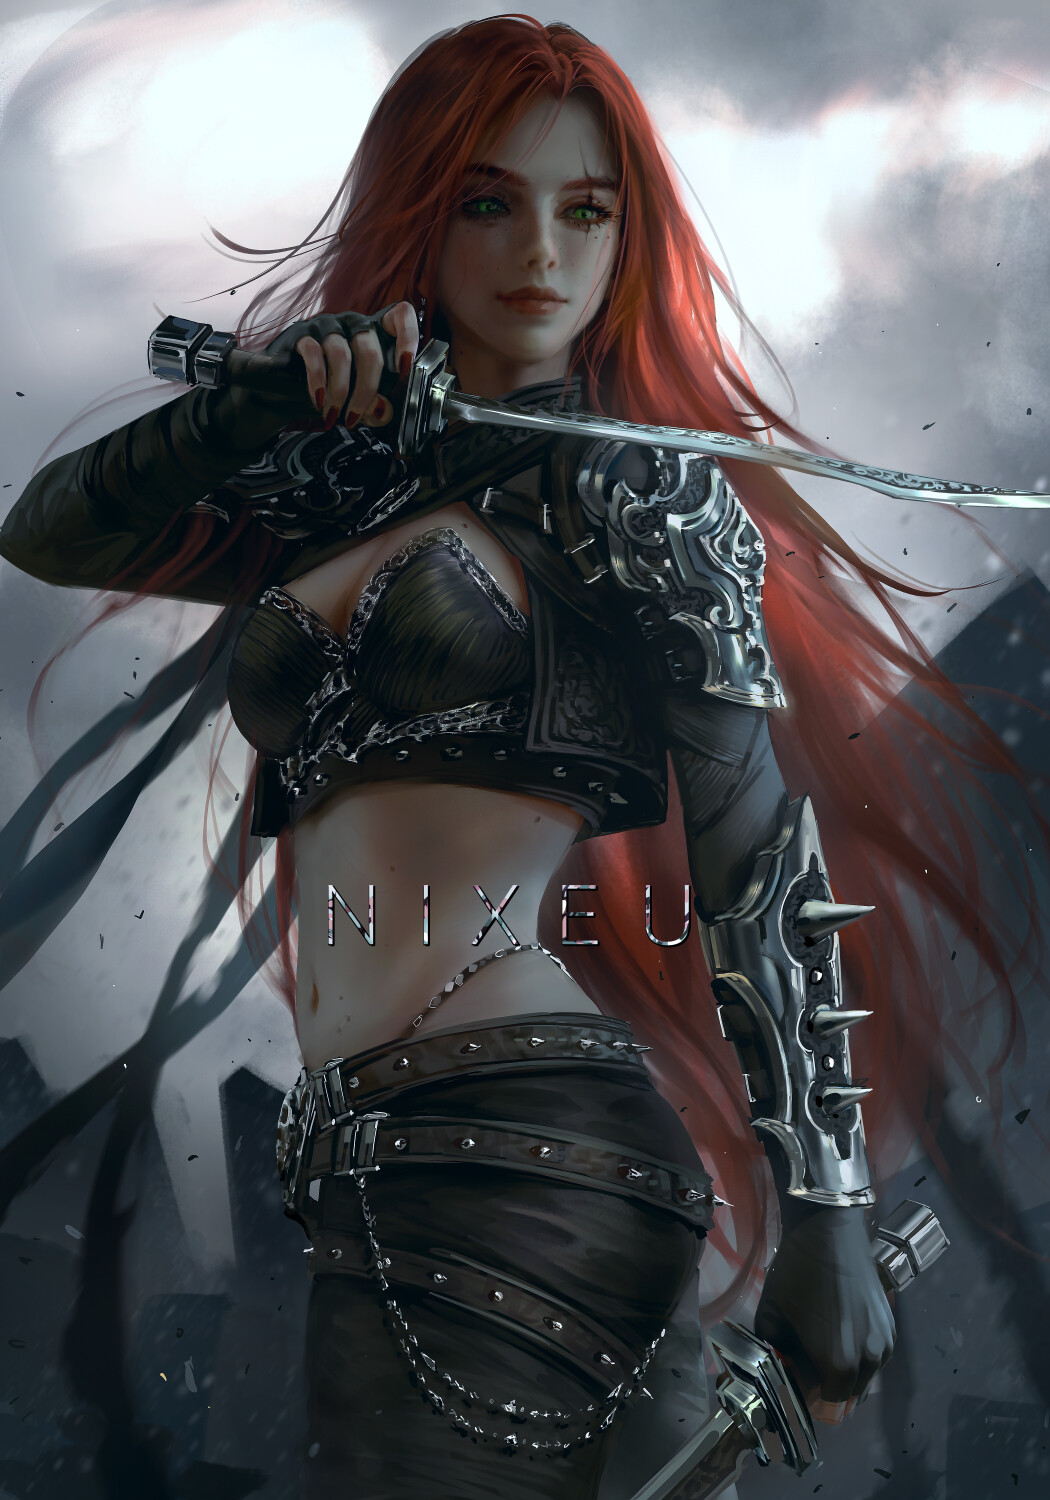 Nixeu Drawing Women Redhead Long Hair Scars Black Clothing Dagger Chains Sky 1050x1500